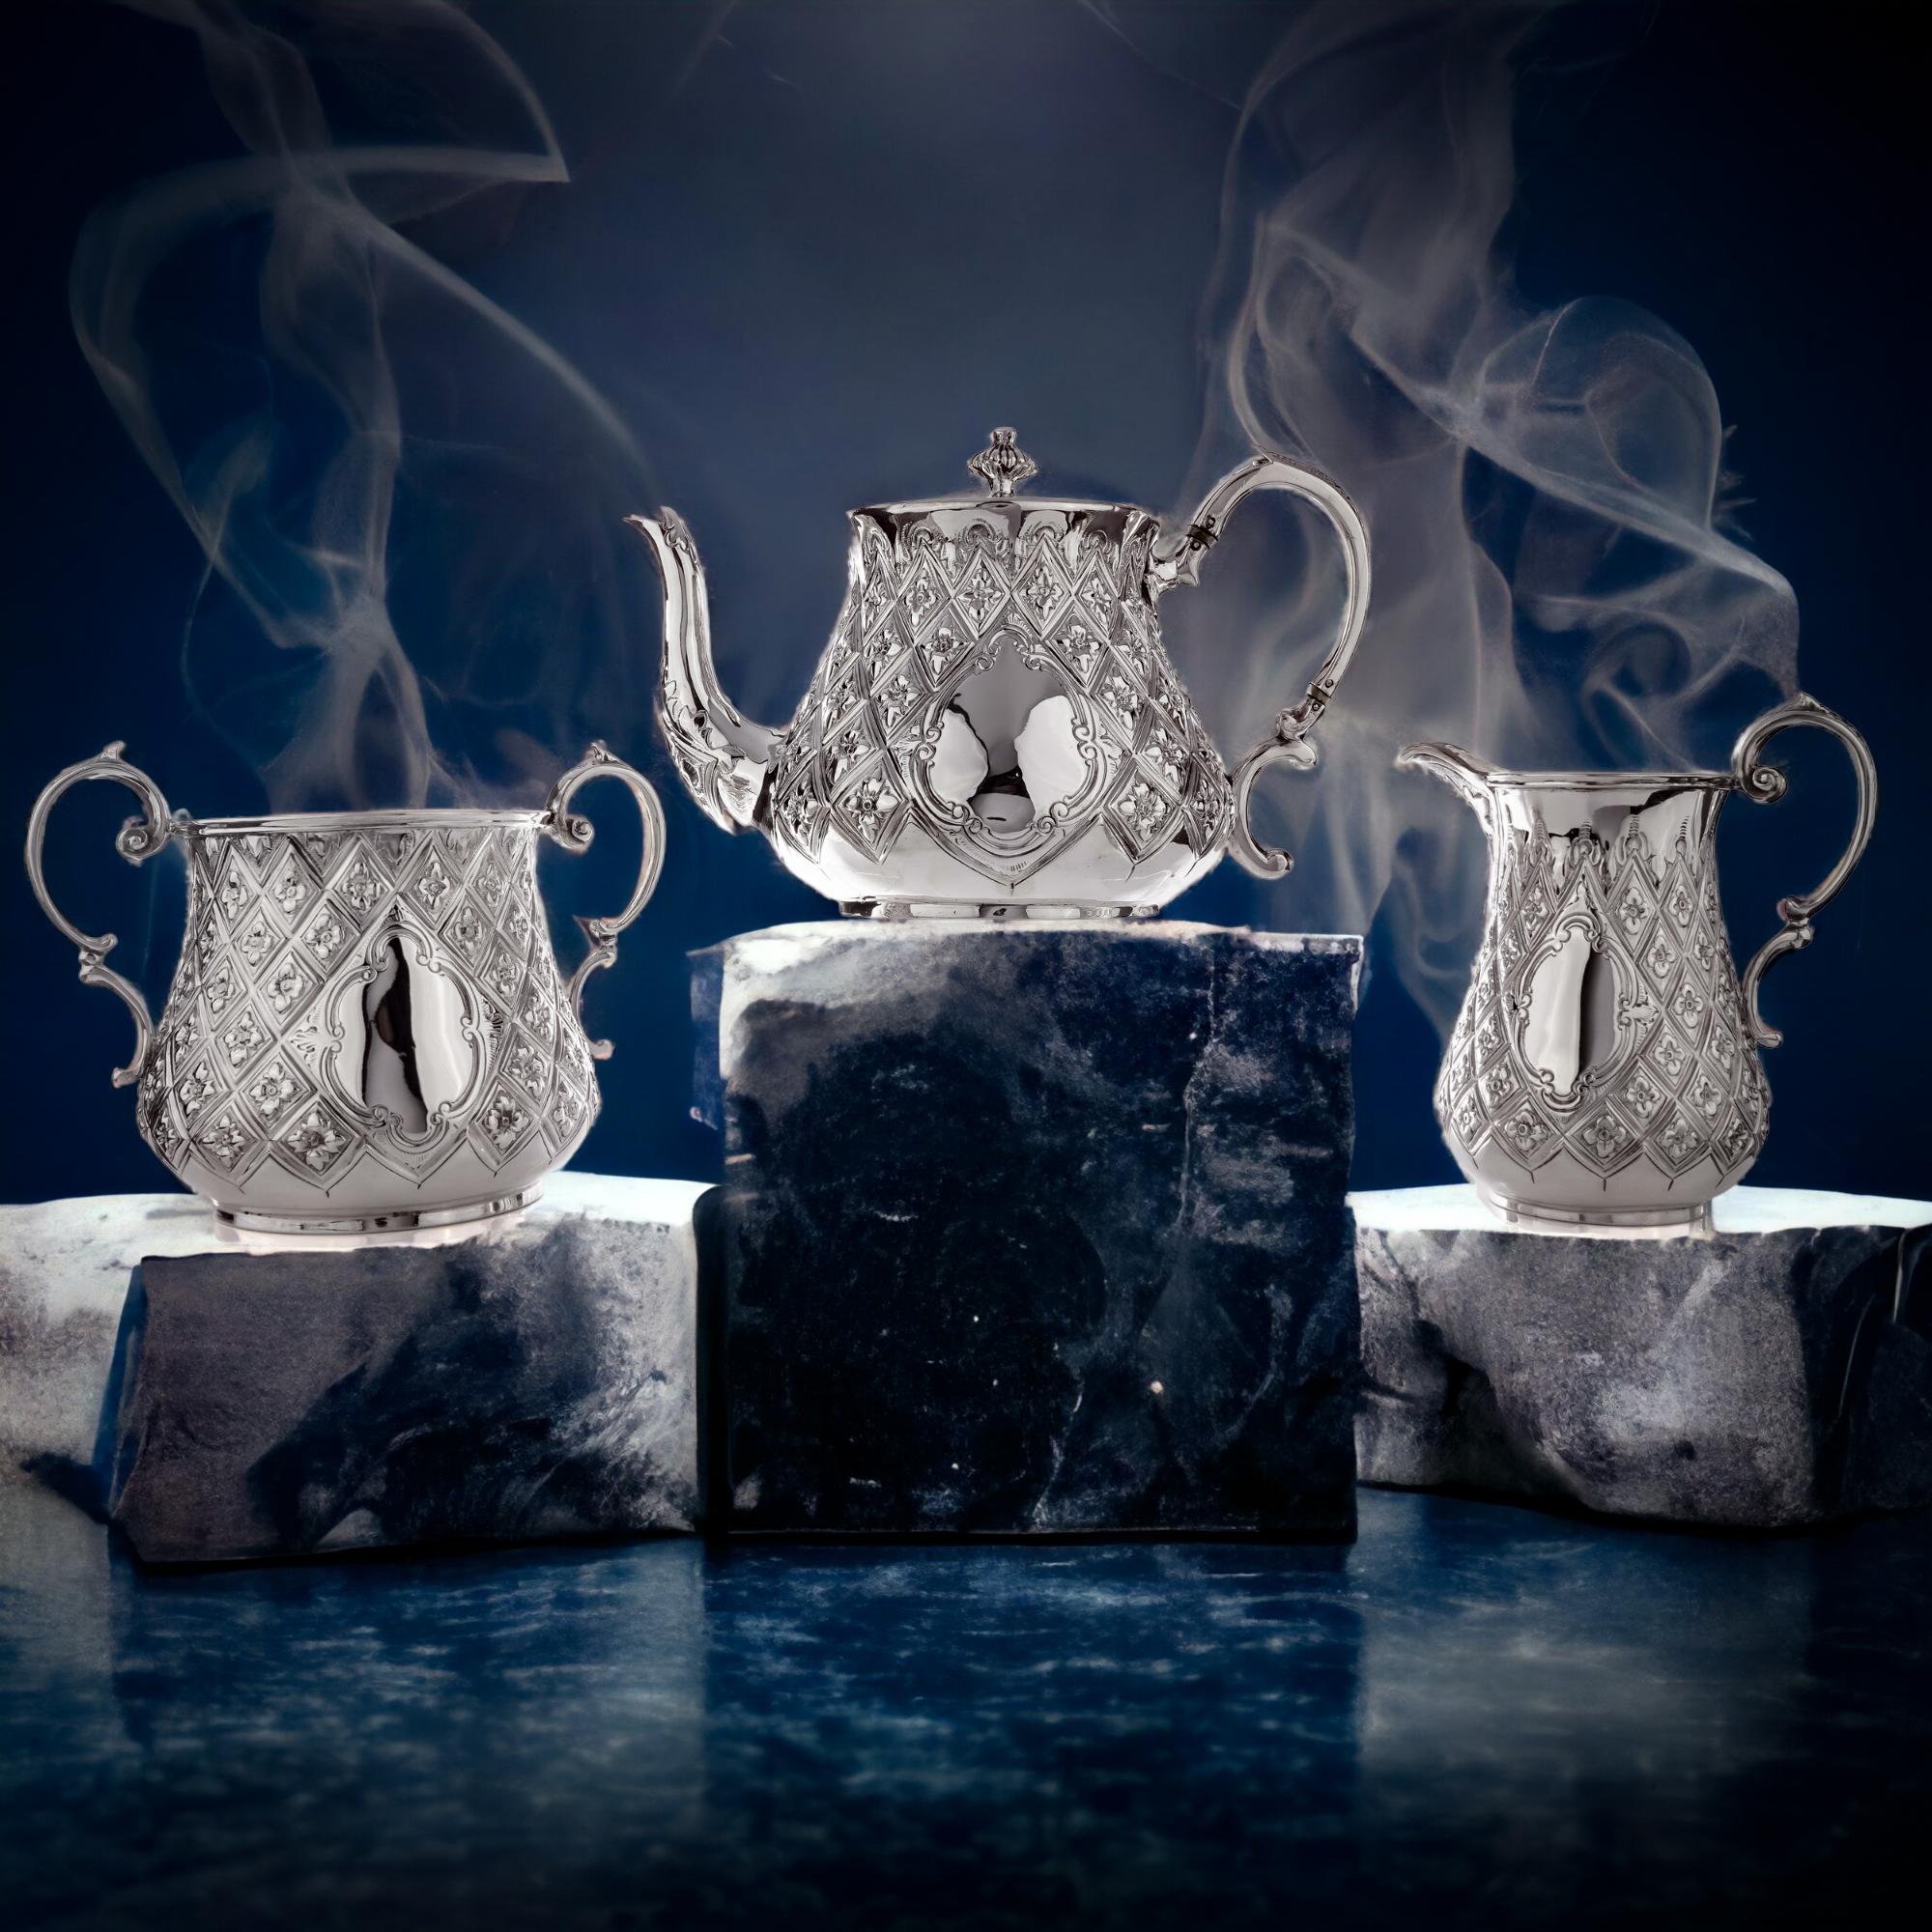 Antique Victorian Silver Three-Piece tea service set.
Made in England, London 1864
Maker: Thomas Smily
Fully hallmarked.

Dimensions -
Teapot: 24.5 x 15.3 x 15.3 cm
Weight: 691 grams

Sugar Bowl: 17.5 x 12.5 x 13 cm
Weight: 382 grams

Cream Jar: